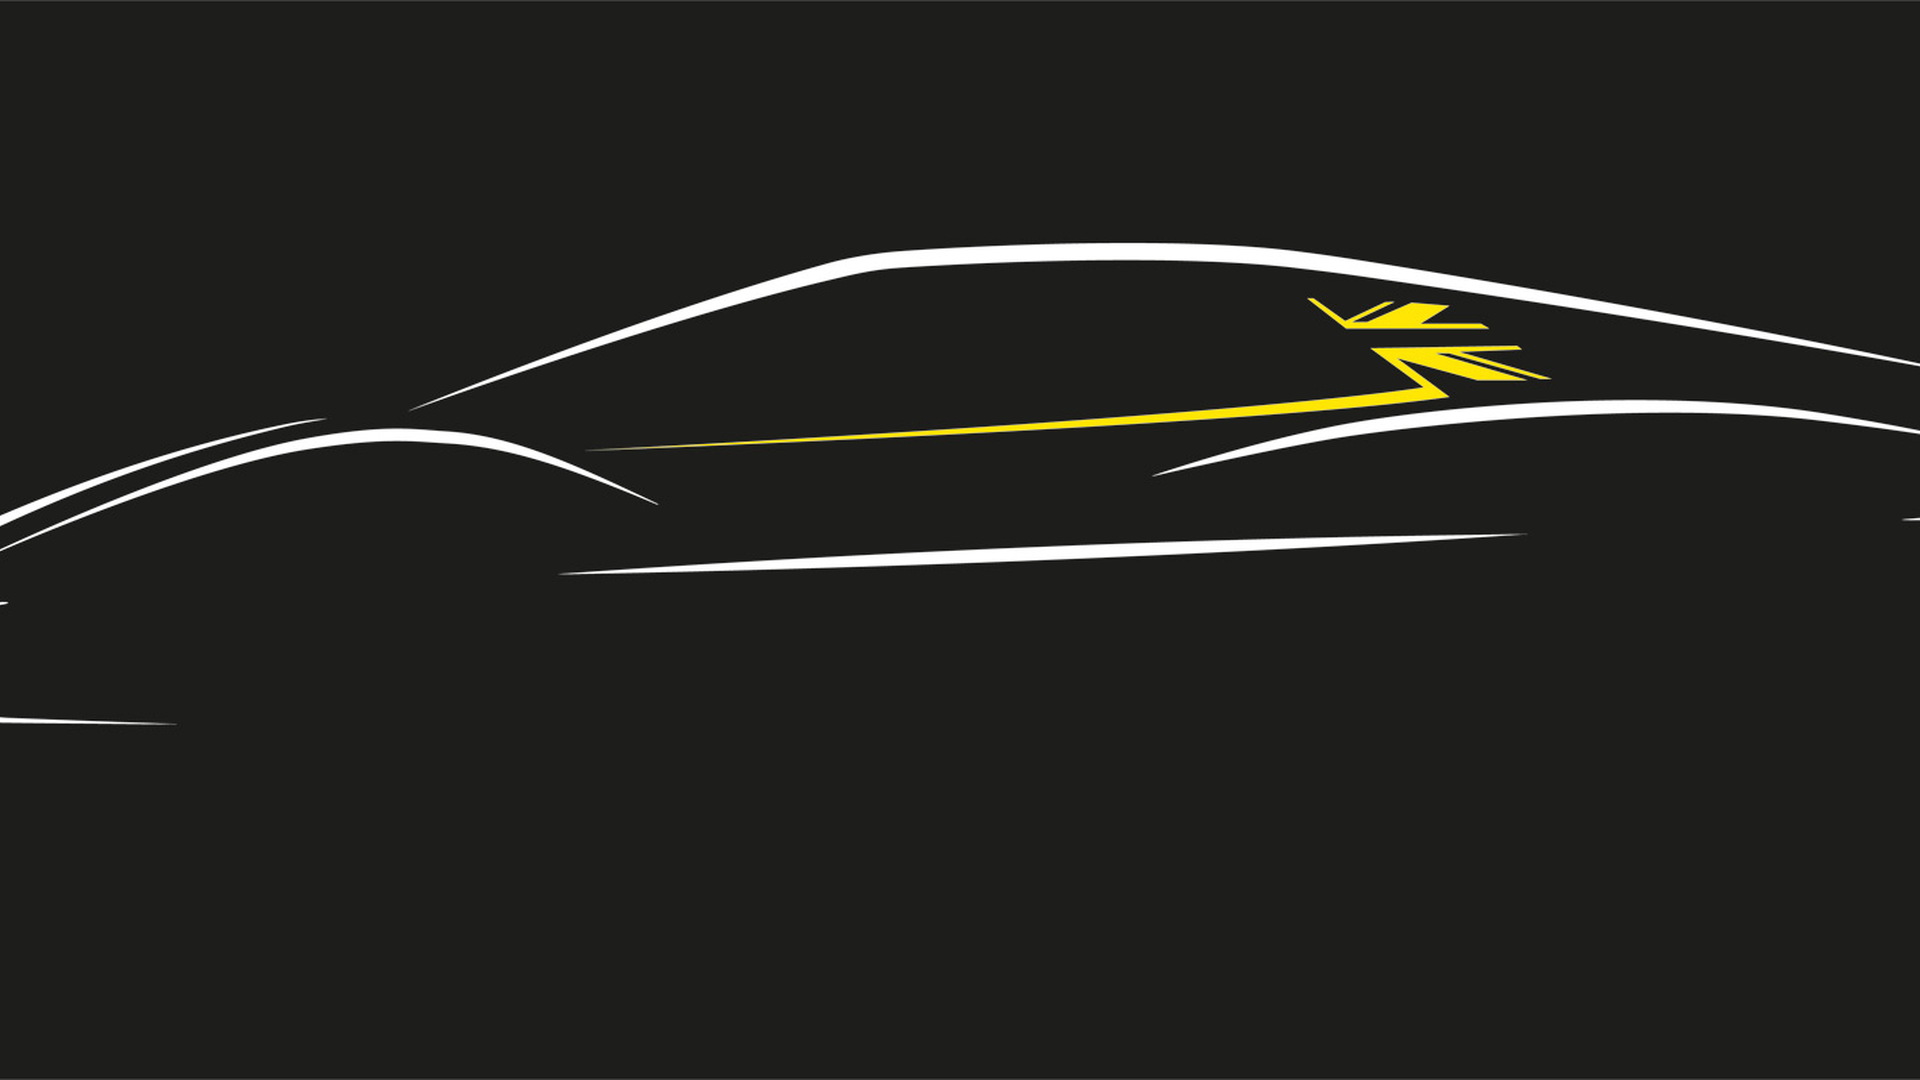 Teaser for Lotus Type 135 electric sports car debuting in 2026